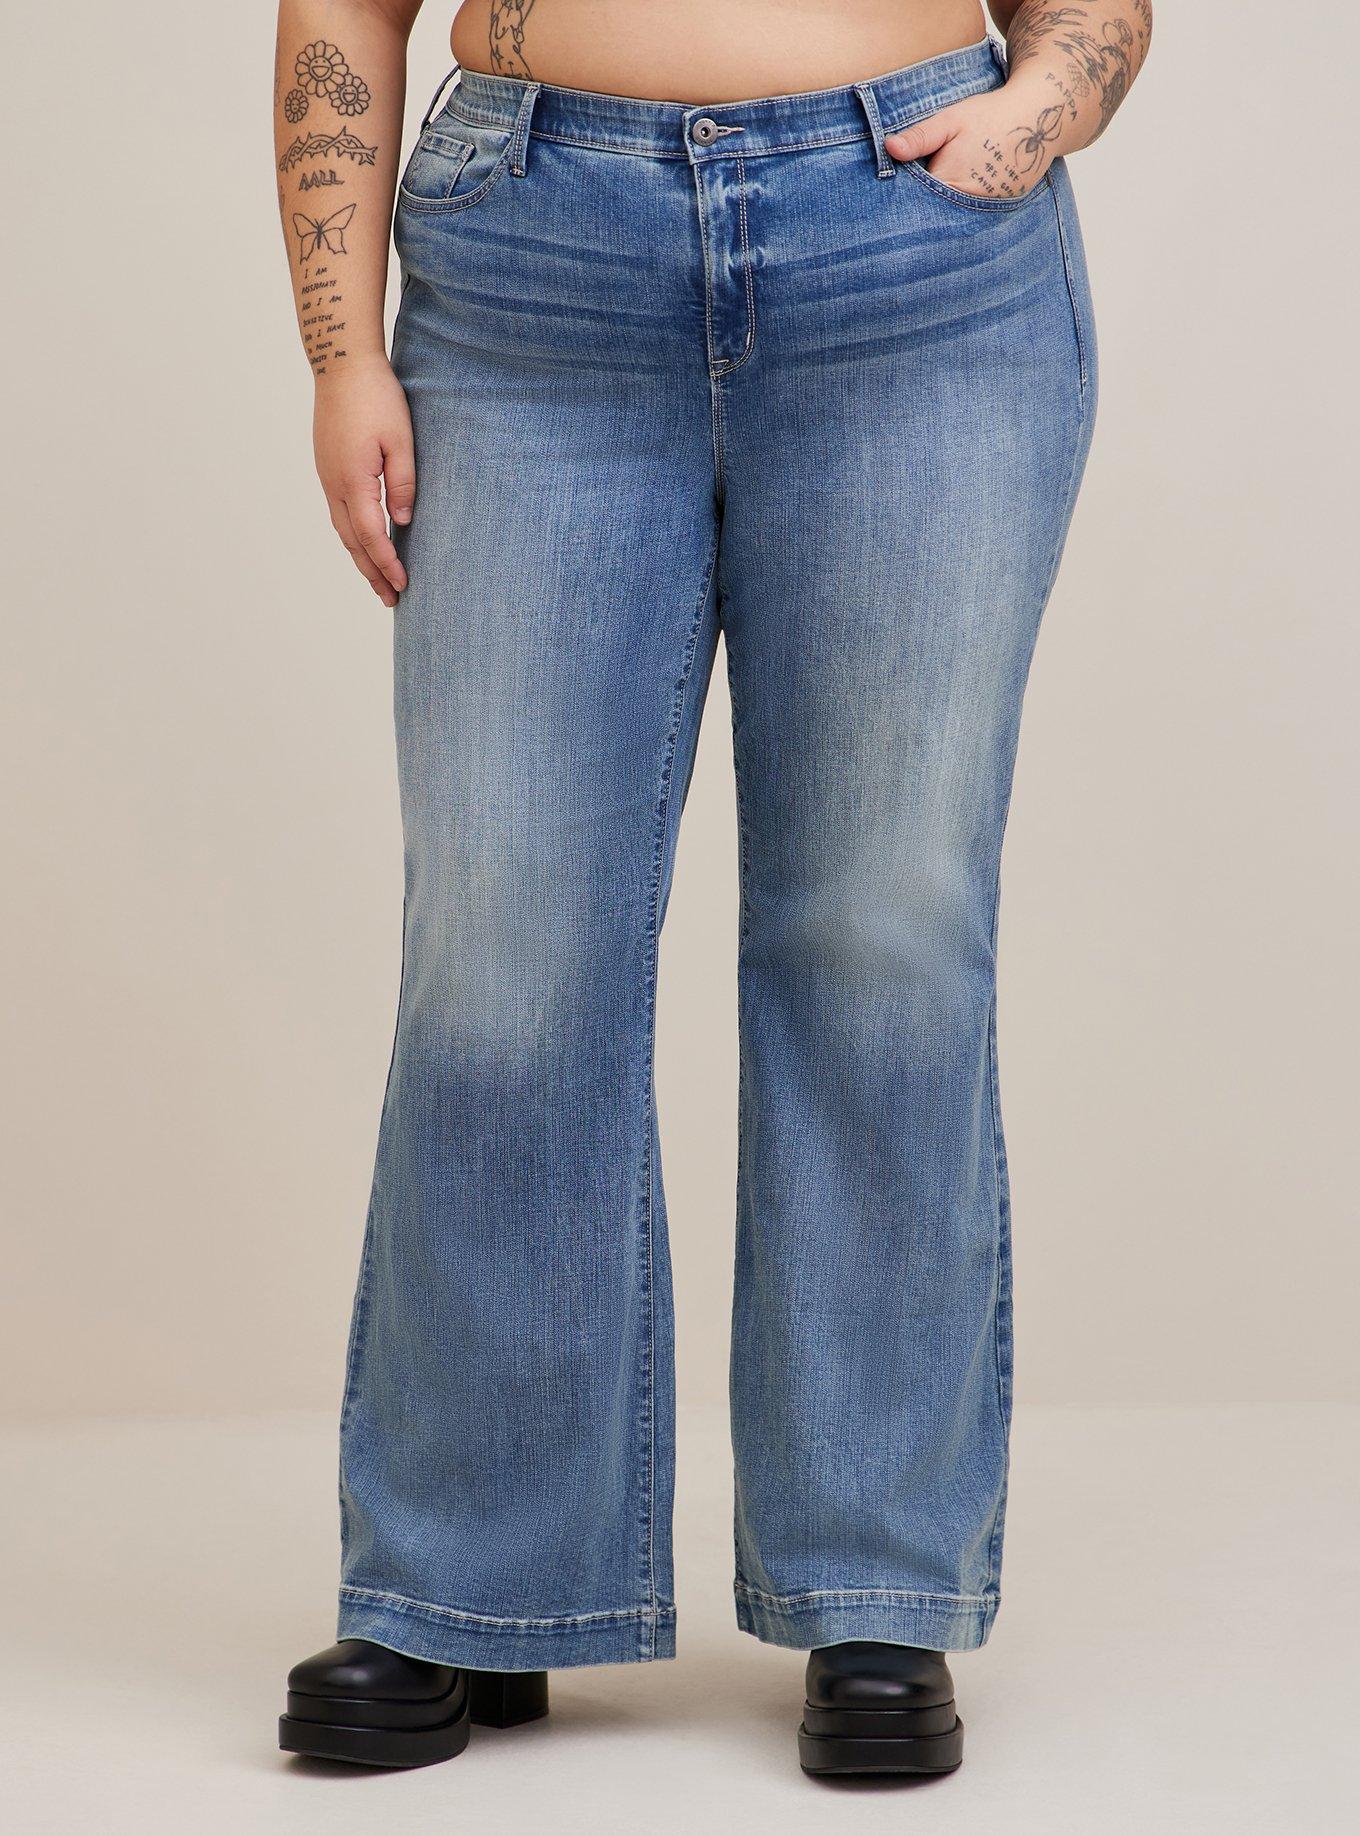 Winona 90's Wide Leg Jeans - Medium Blue Wash